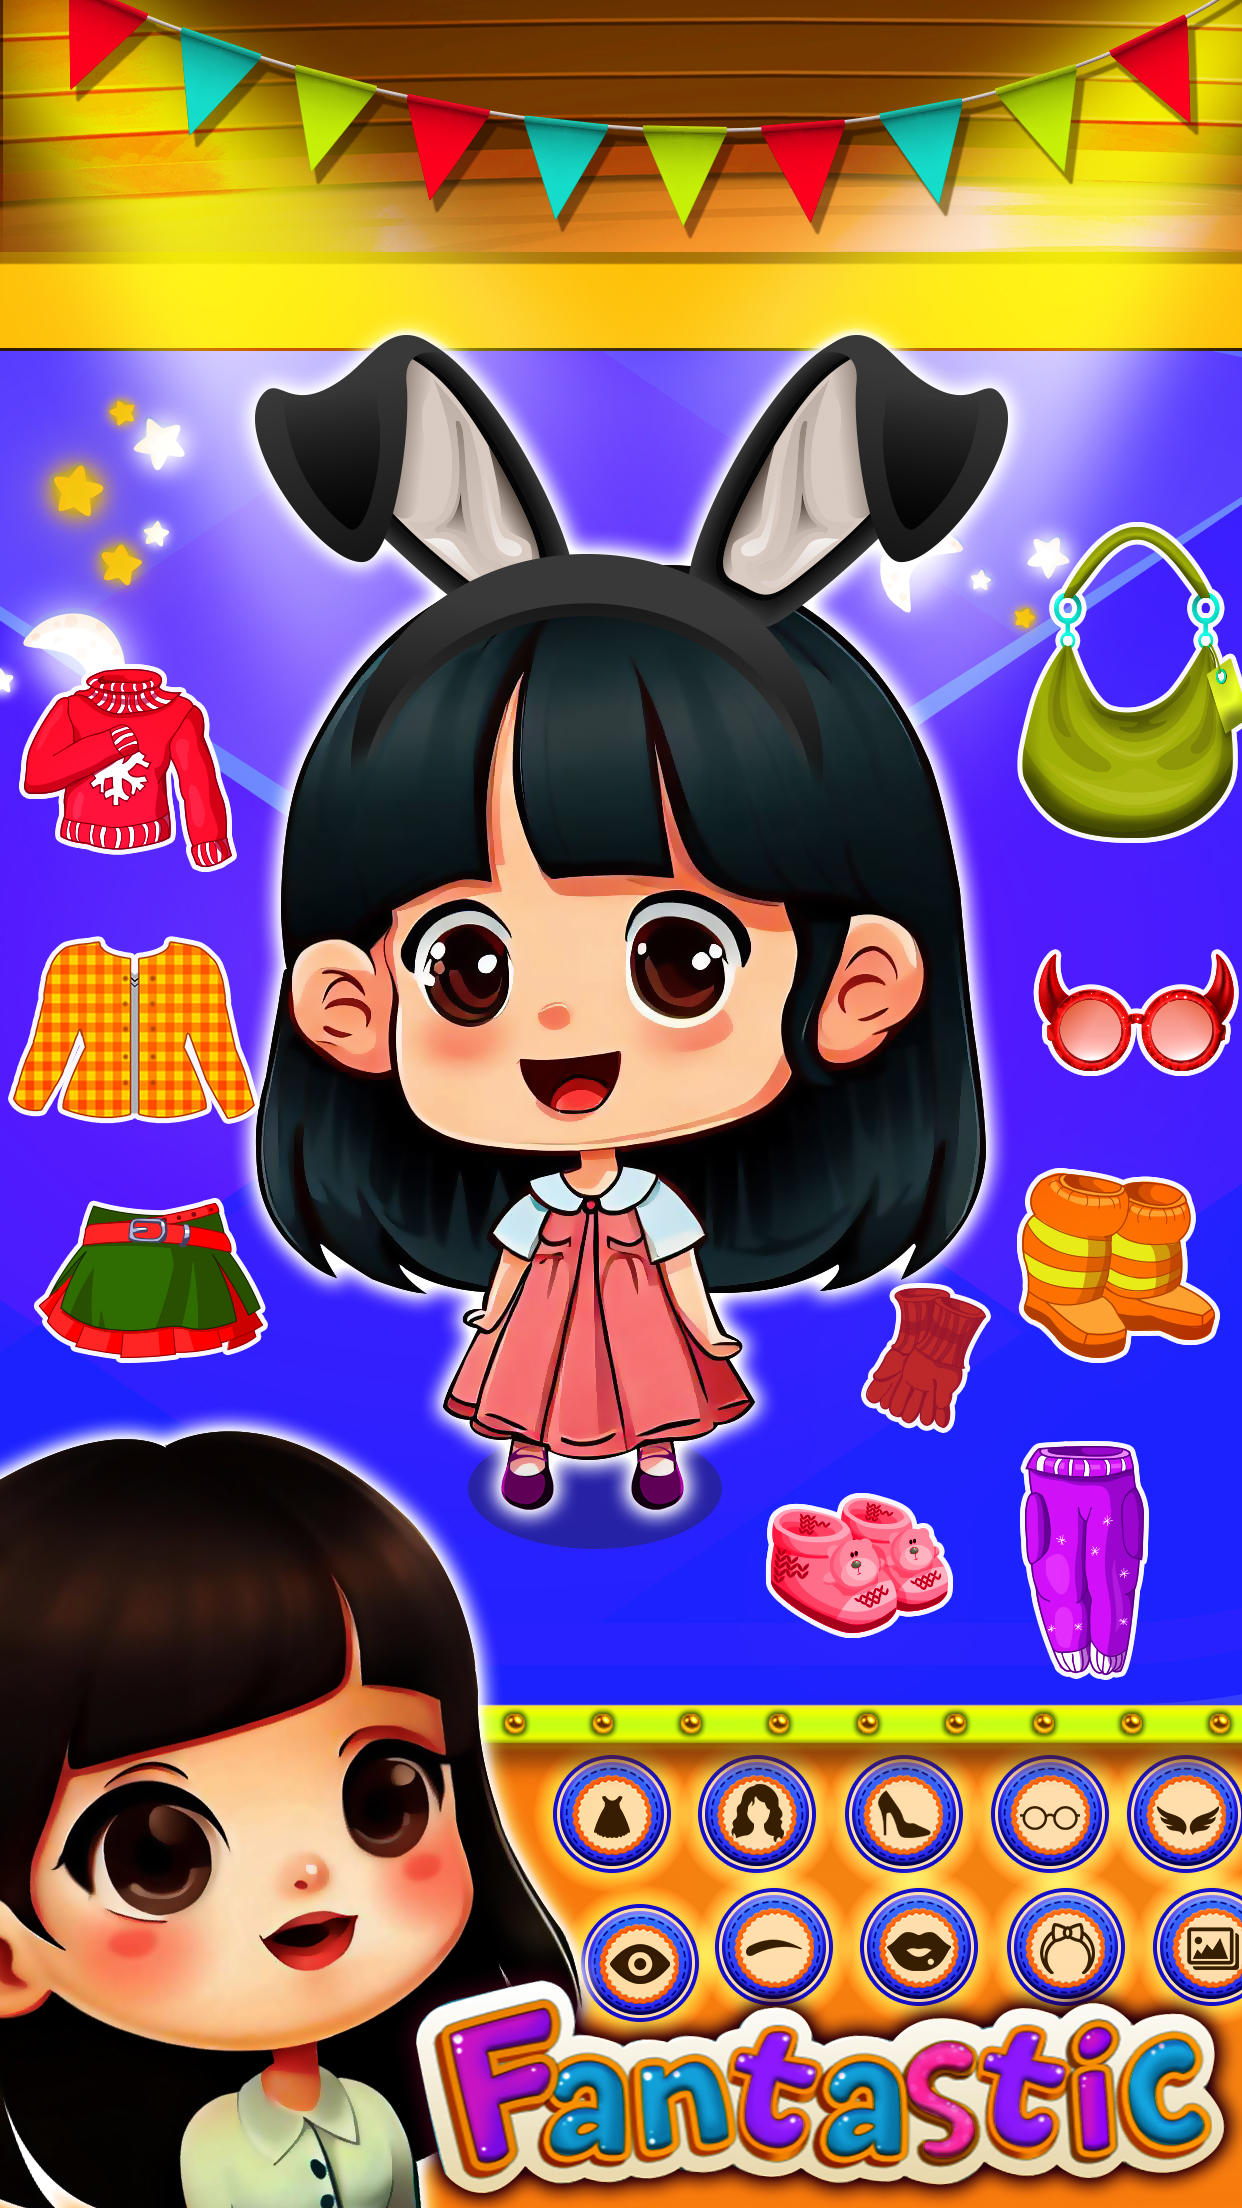 Boneca Bonito - Criador de Chibi Avatar::Appstore for Android